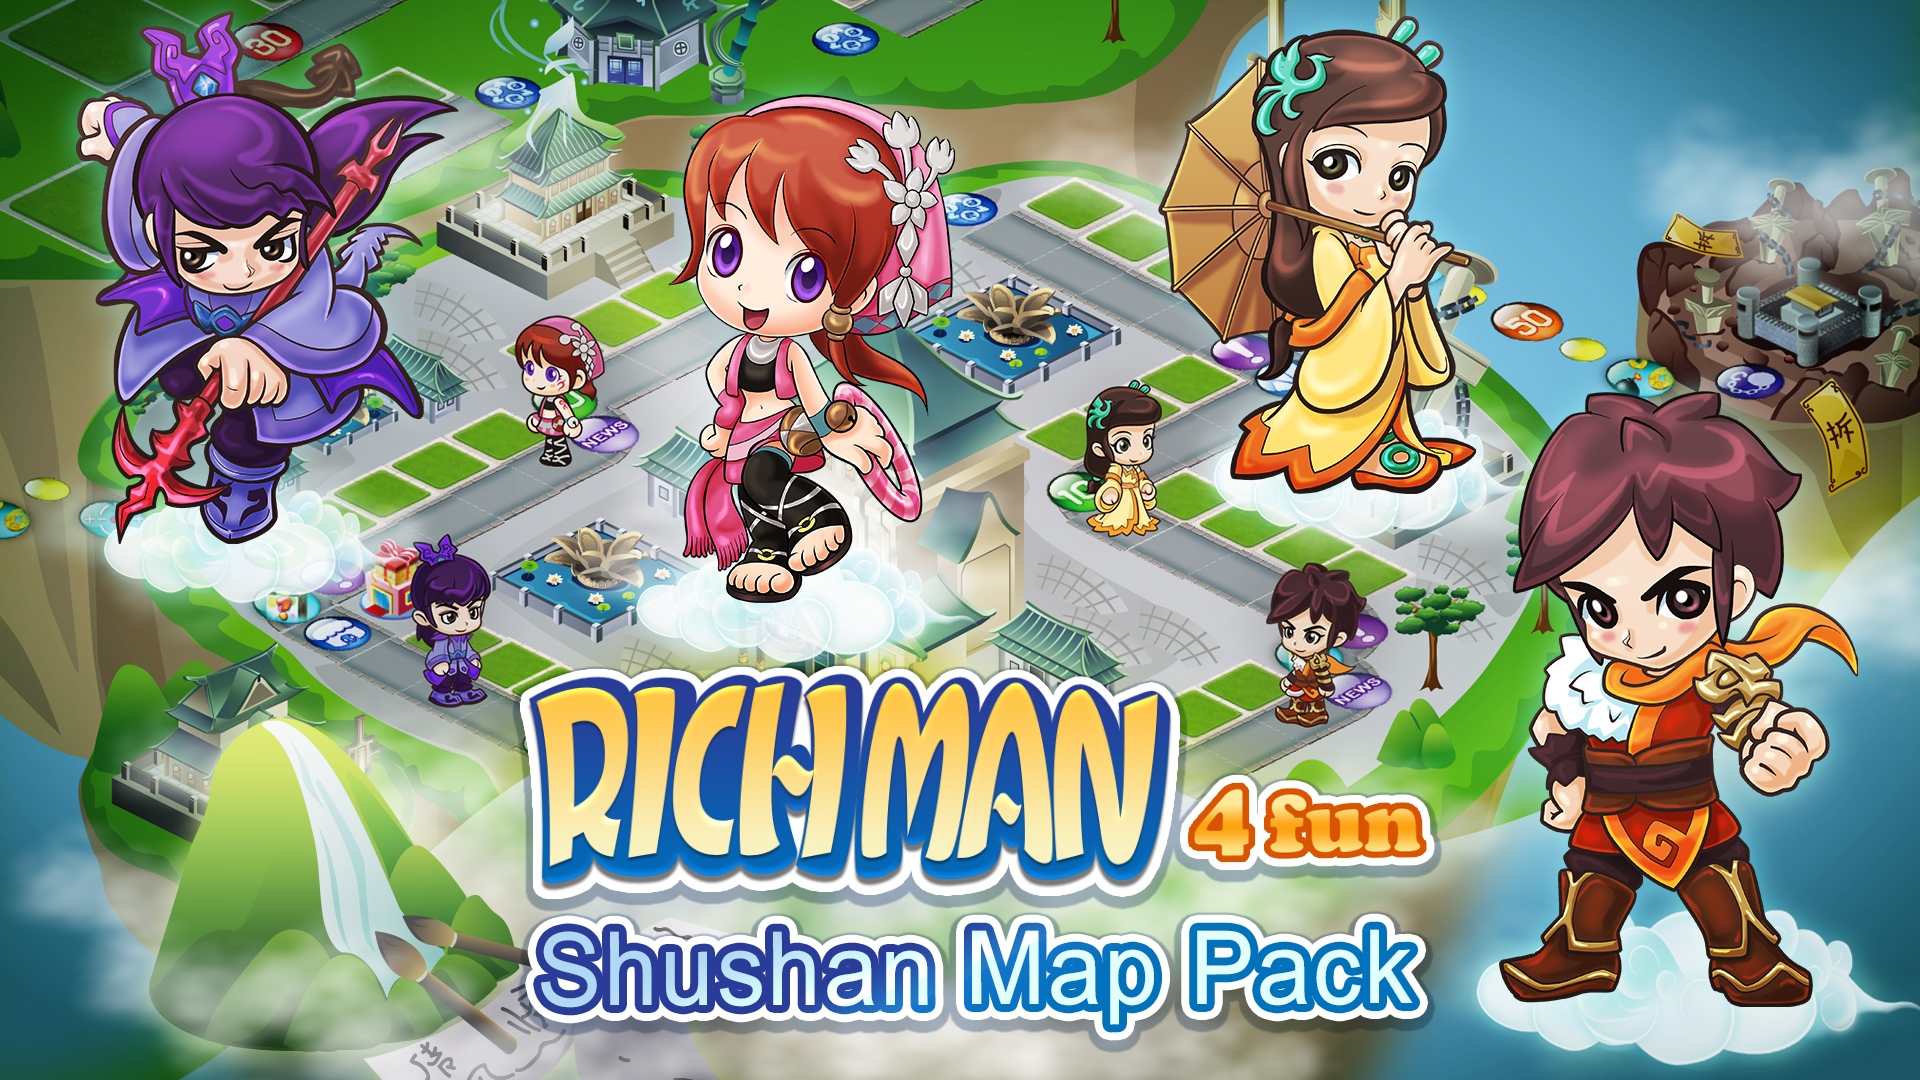 Shushan Map Pack